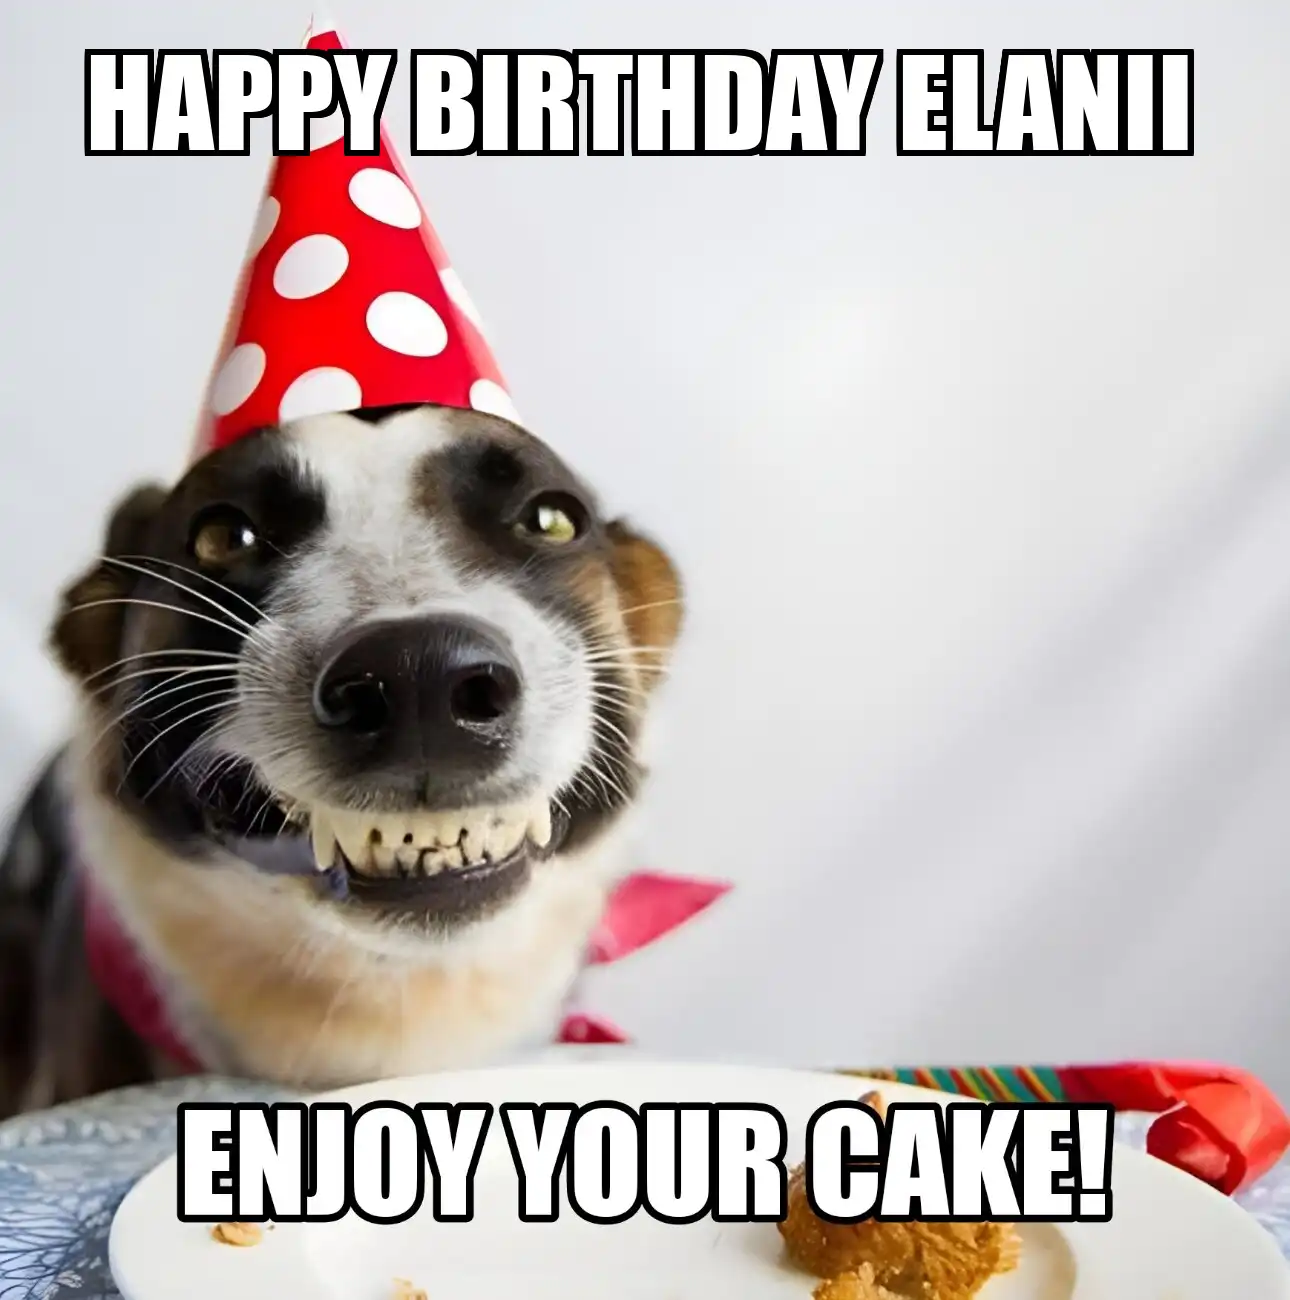 Happy Birthday Elanii Enjoy Your Cake Dog Meme